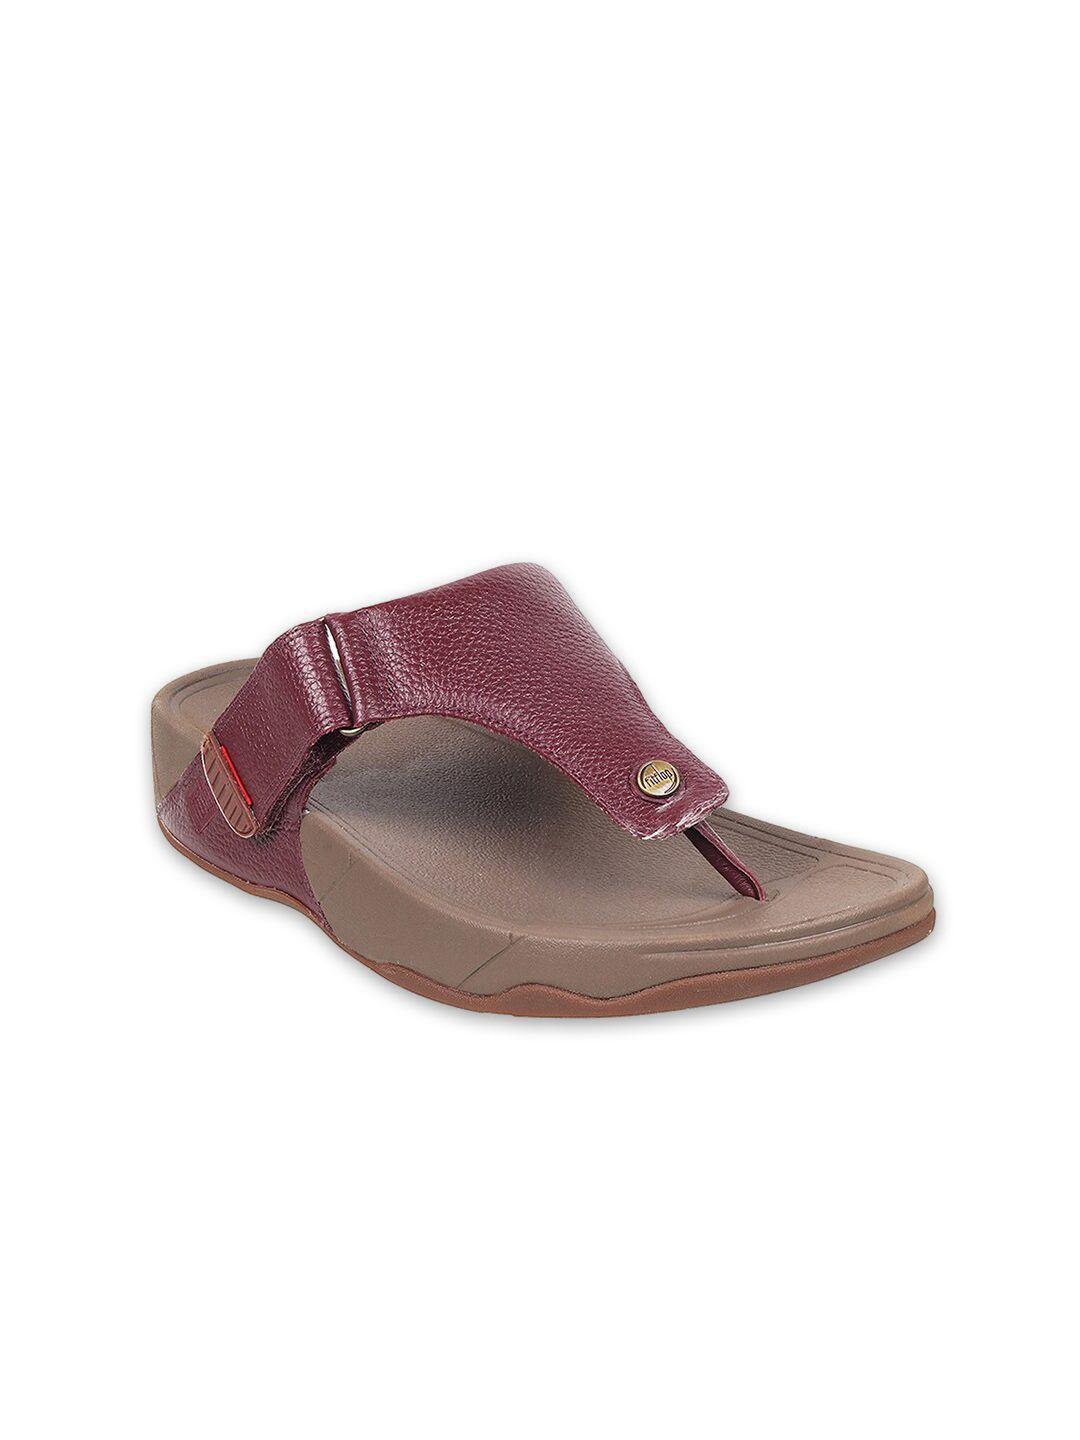 fitflop men open toe leather comfort sandals